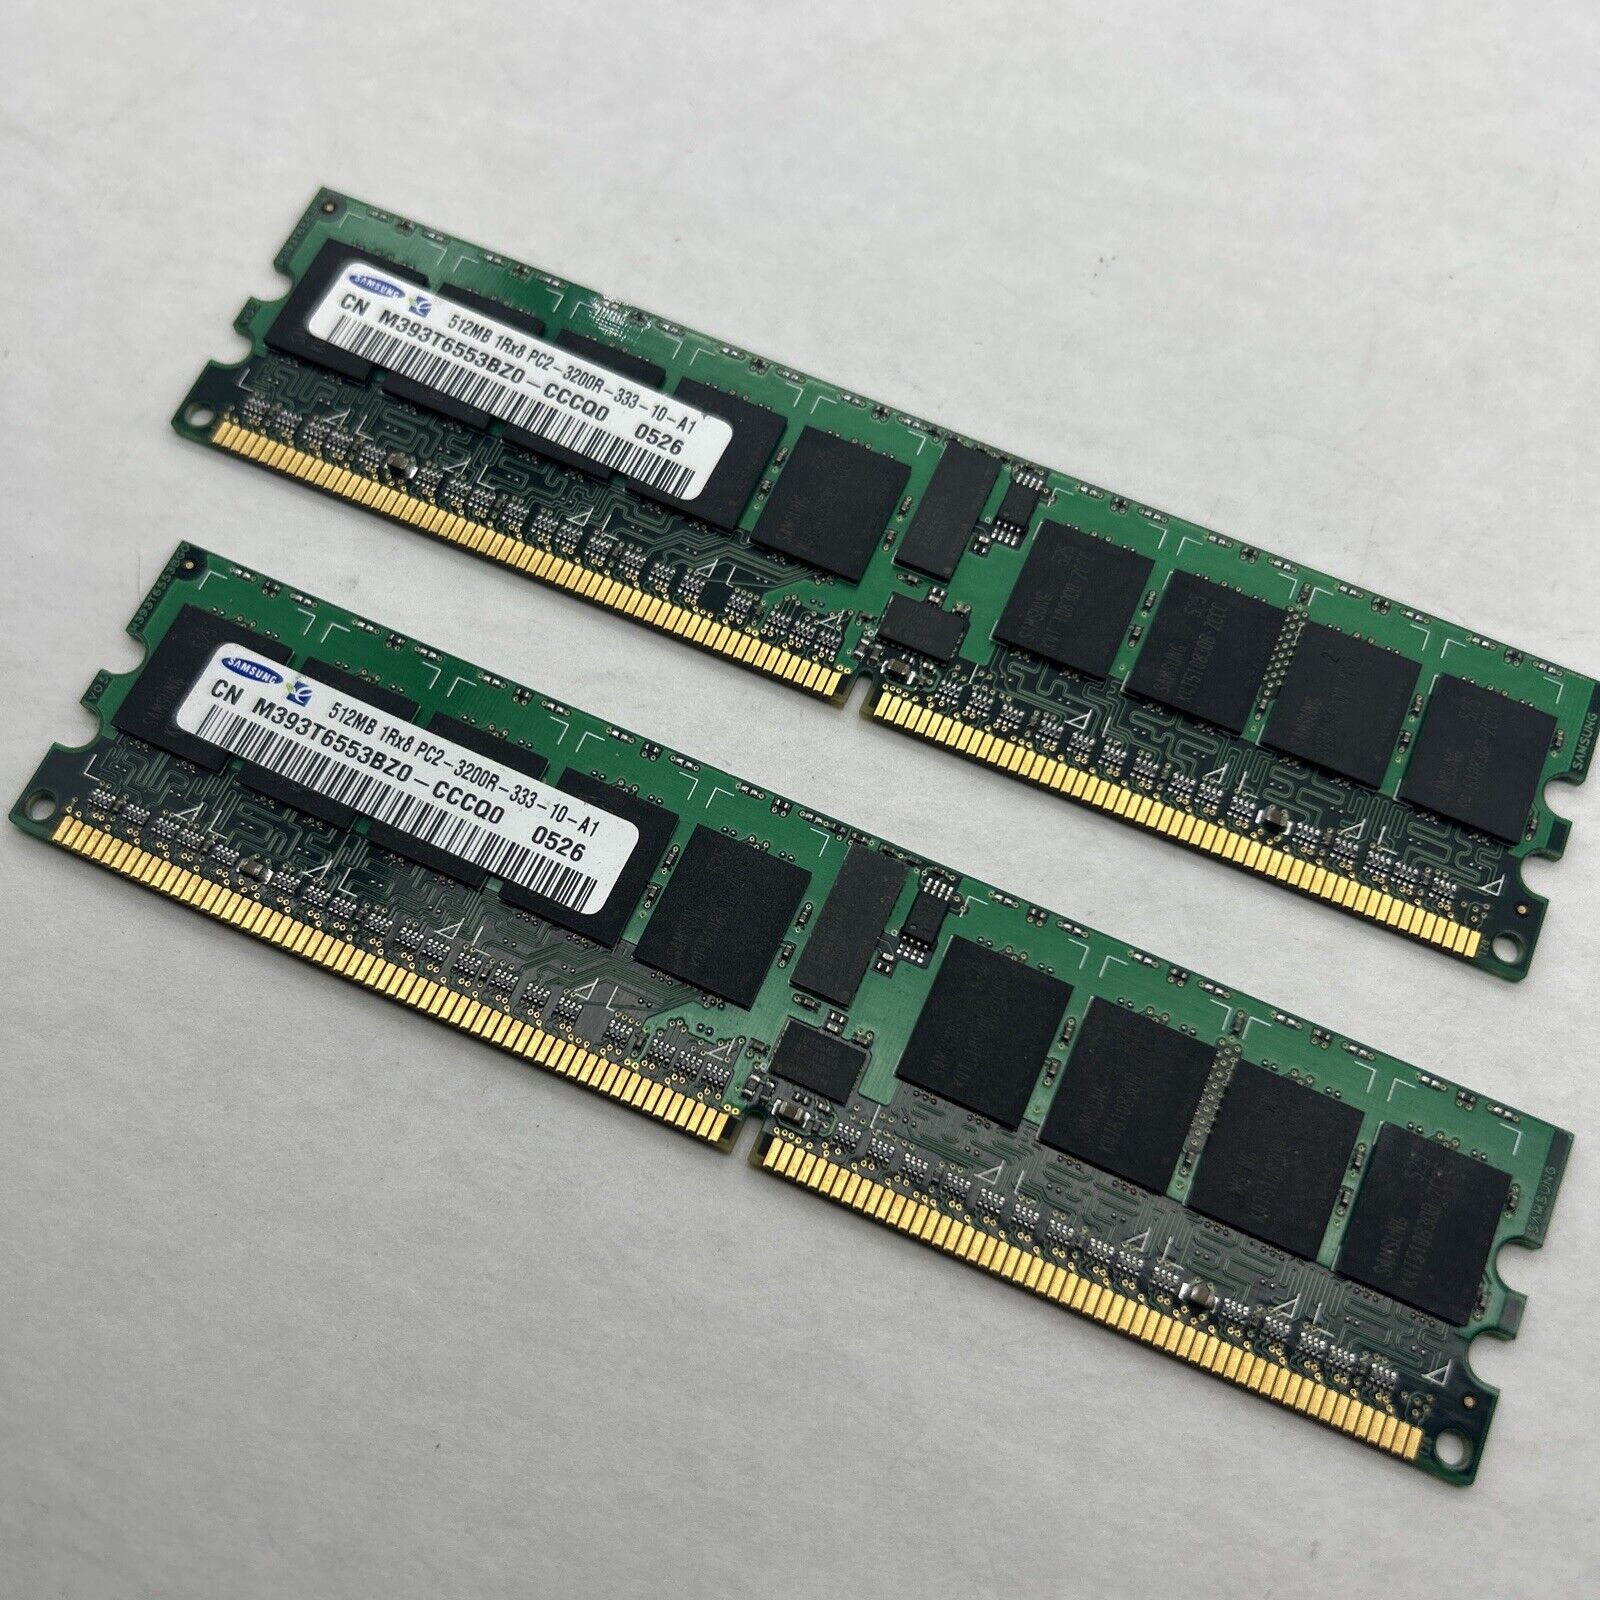 1GB Ram -2pcs 512mb PC2-3200R-333 DDR400 SDRAM Memory ECC Matched Pair HP 345112